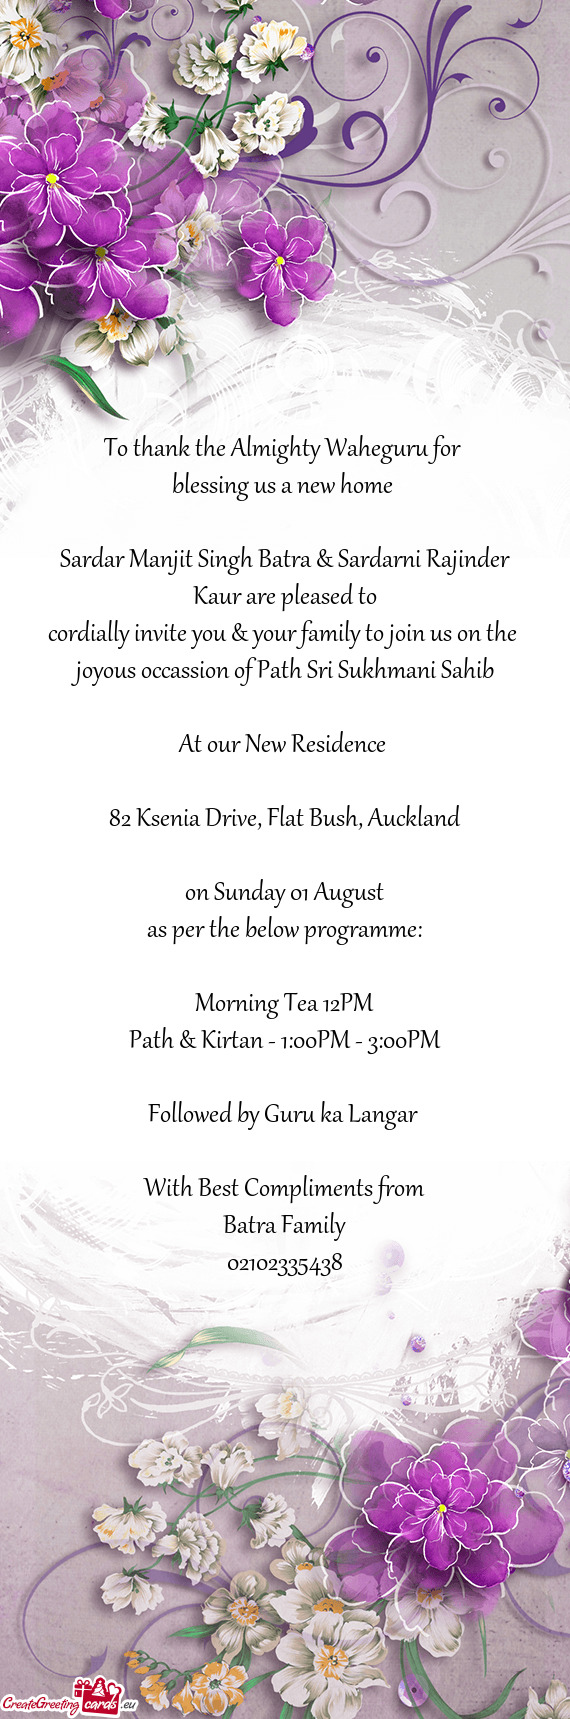 Sardar Manjit Singh Batra & Sardarni Rajinder Kaur are pleased to